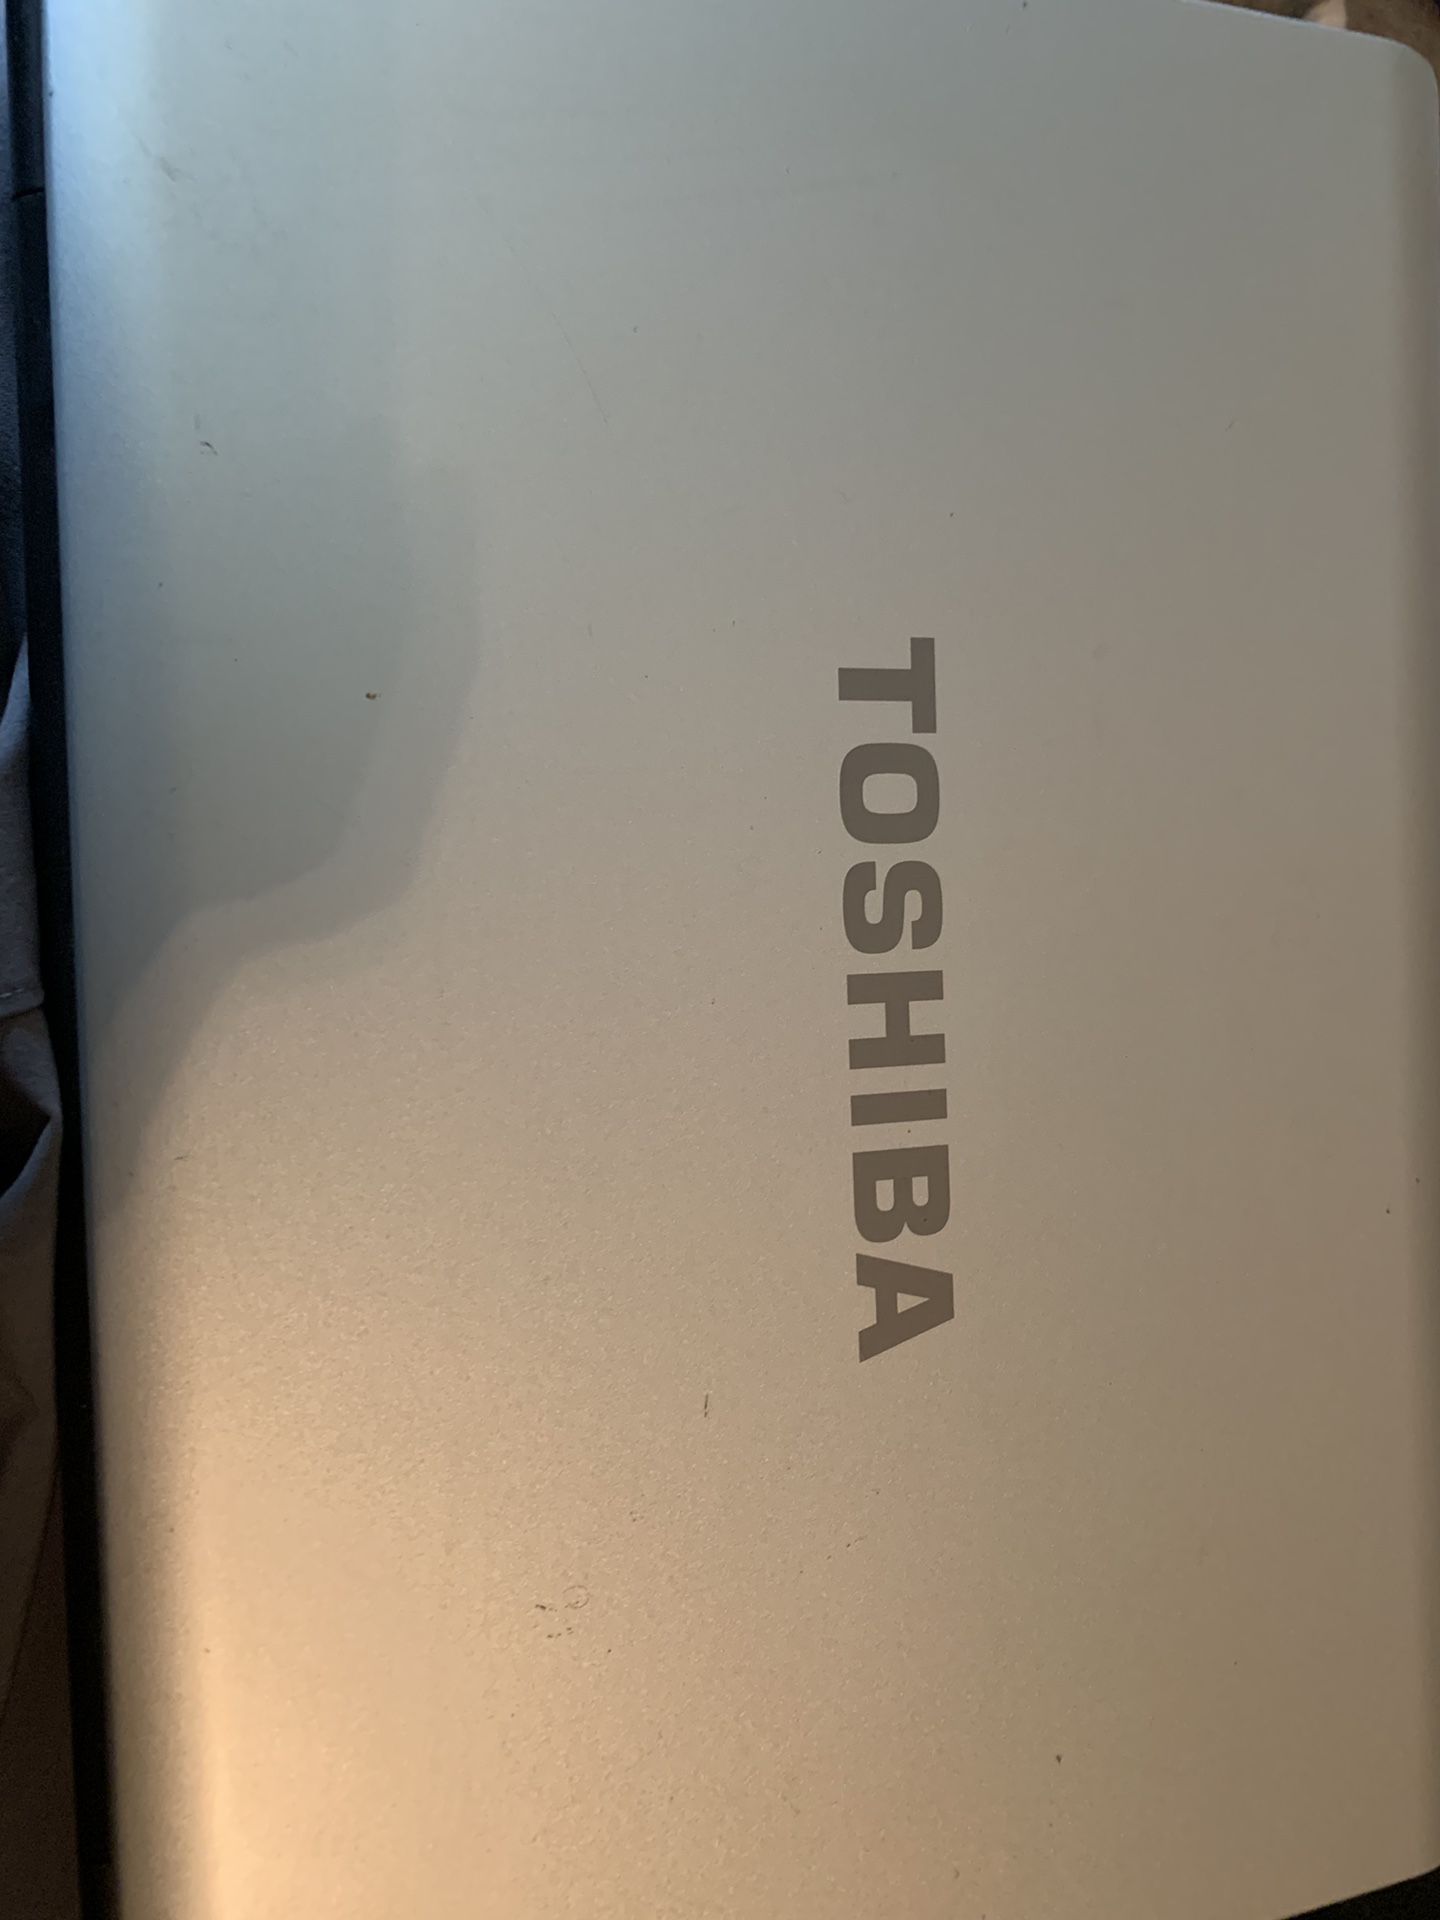 Toshiba Laptop “15 screen